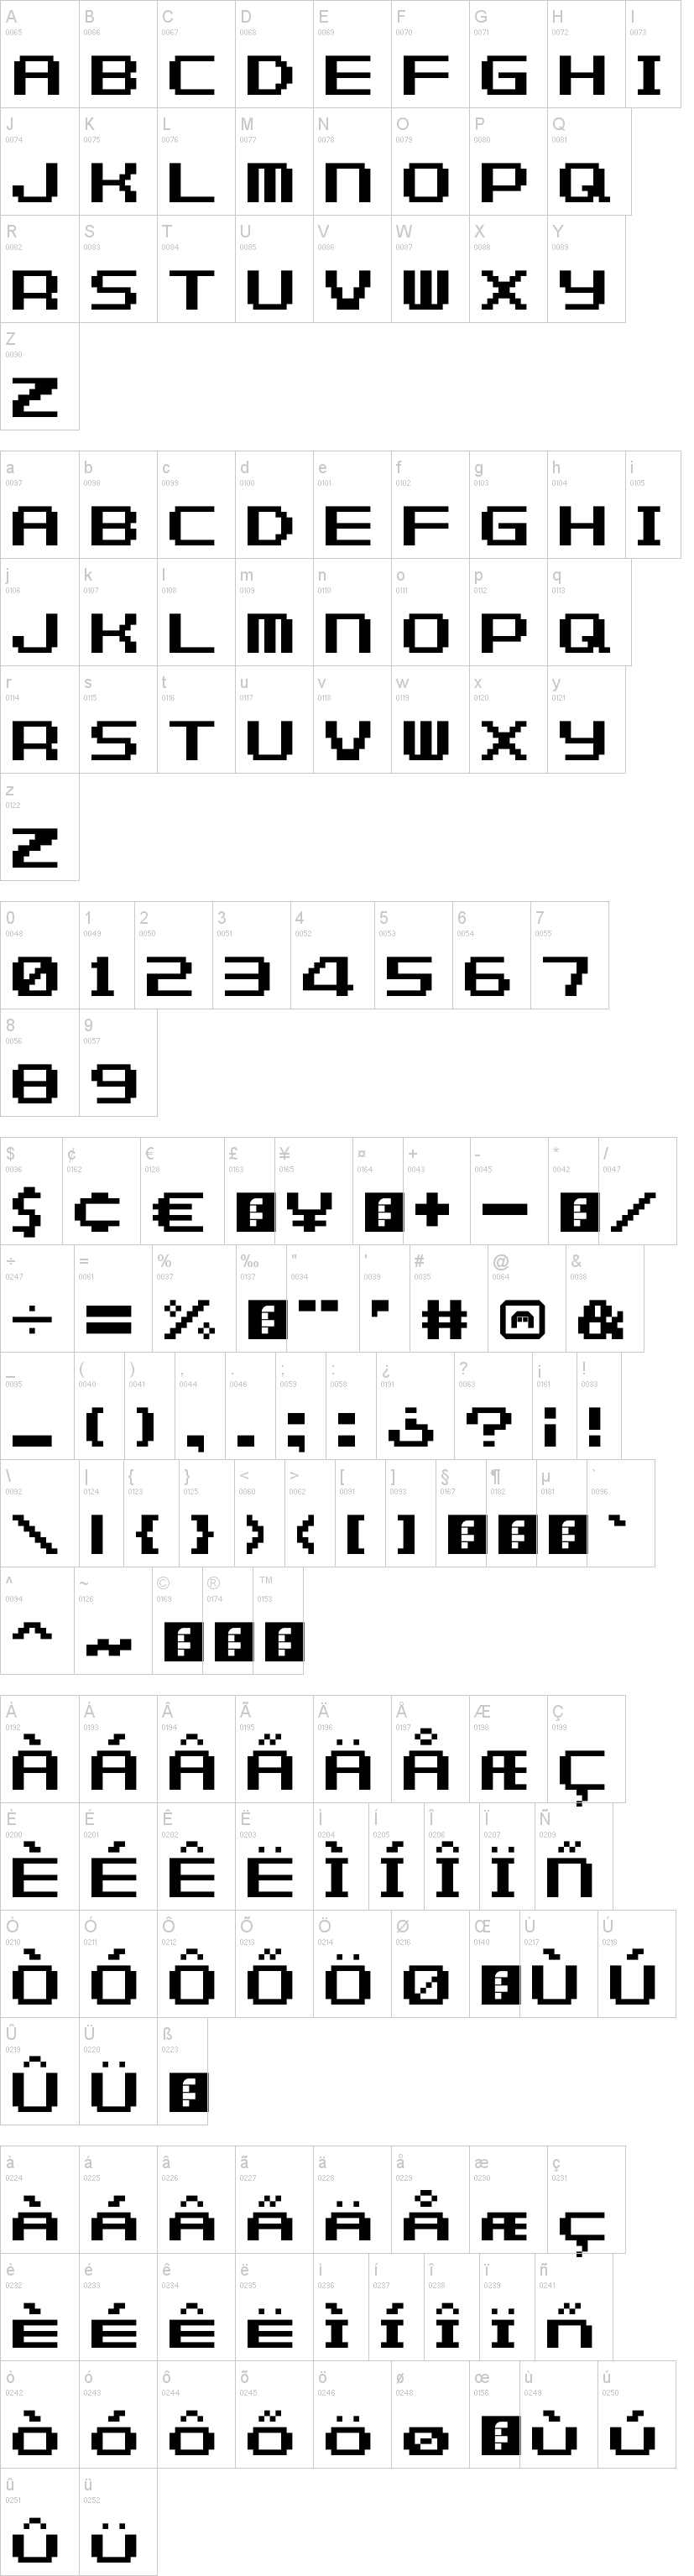 F-Zero GBA Text 1